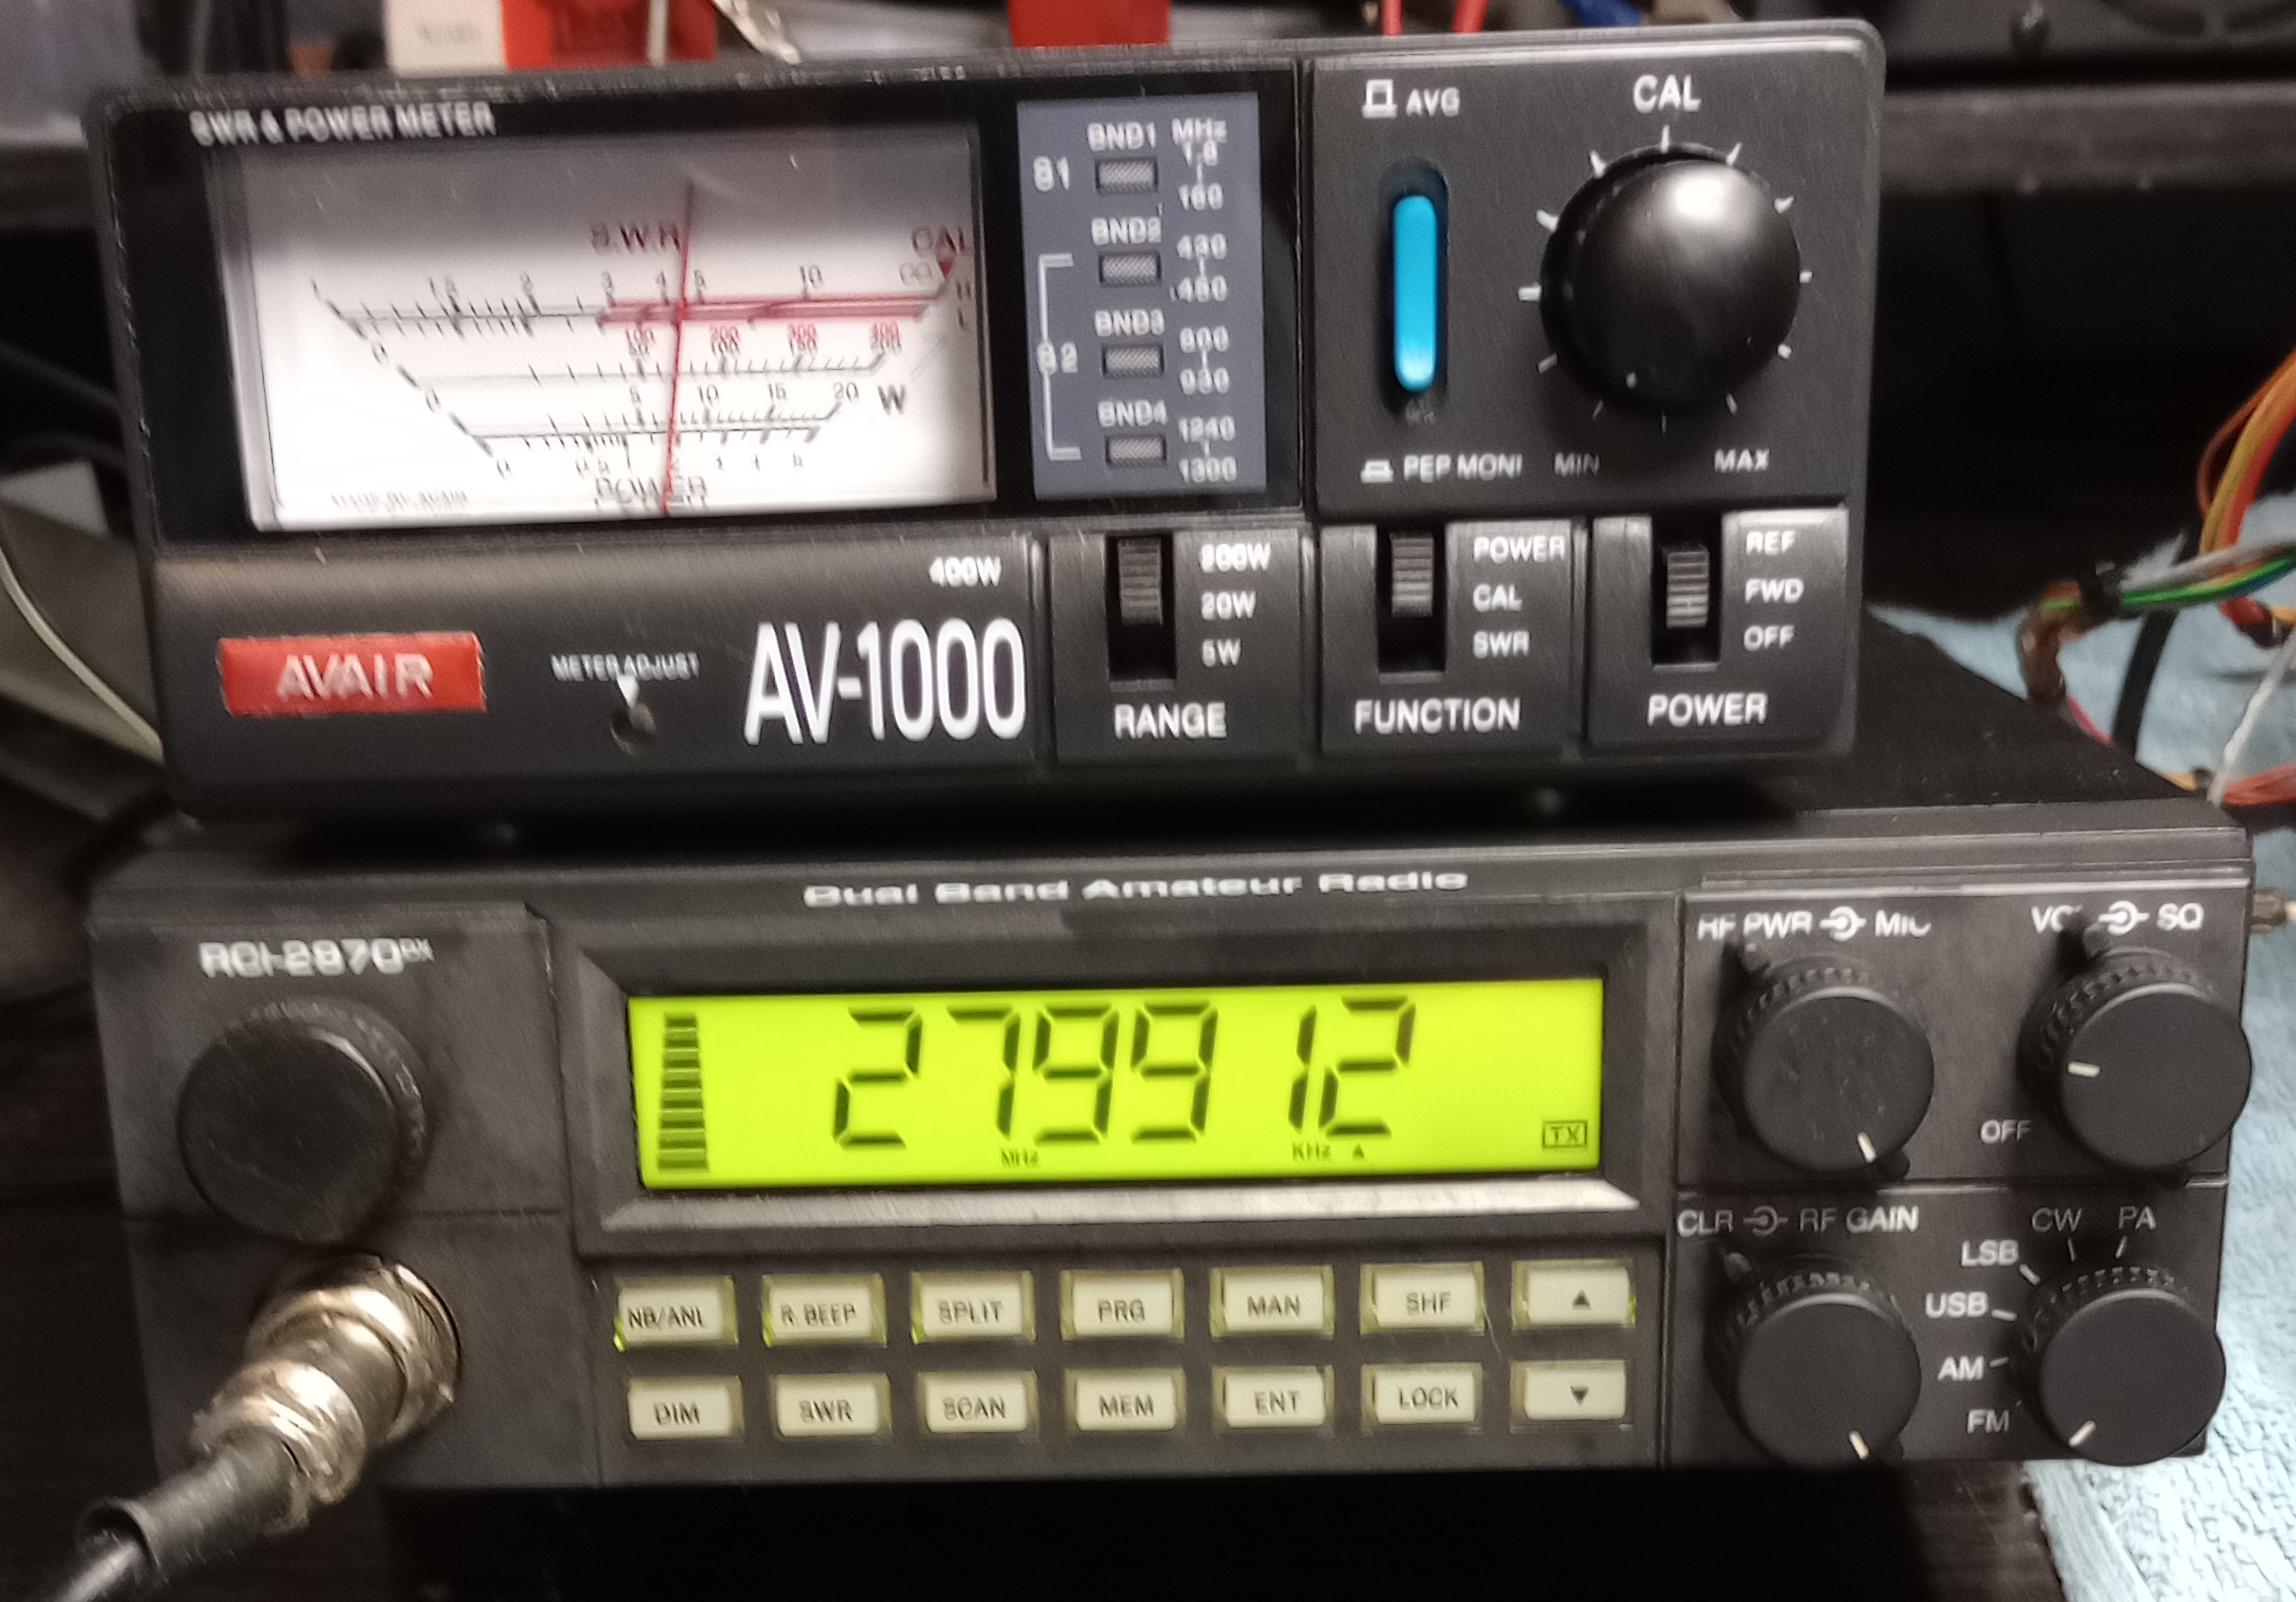 Front of radio transmitting